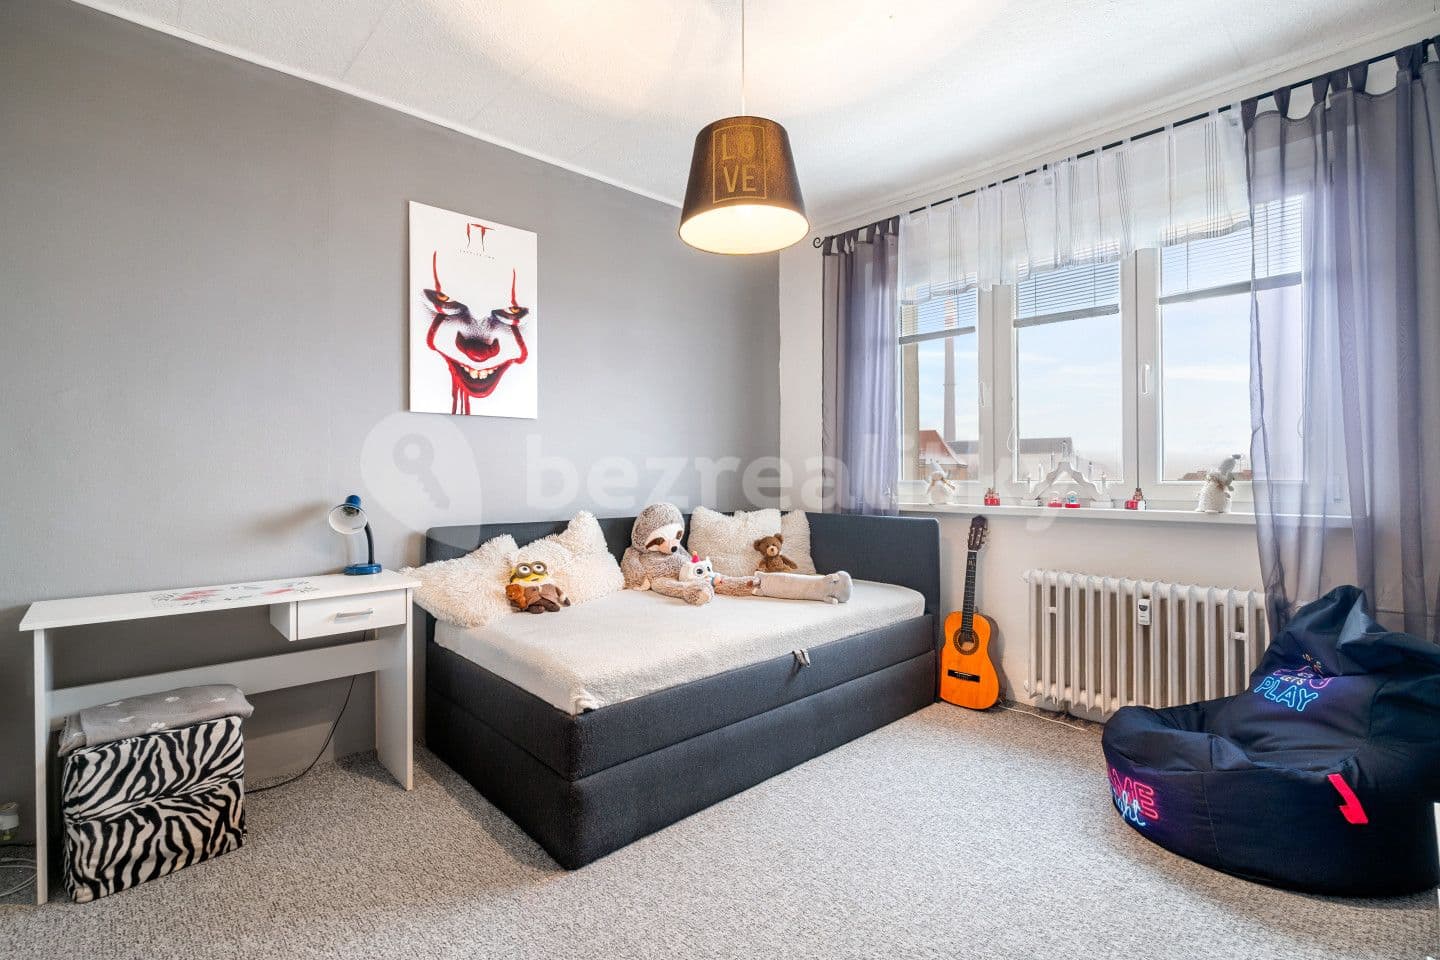 2 bedroom flat for sale, 52 m², Duchcovská, Teplice, Ústecký Region